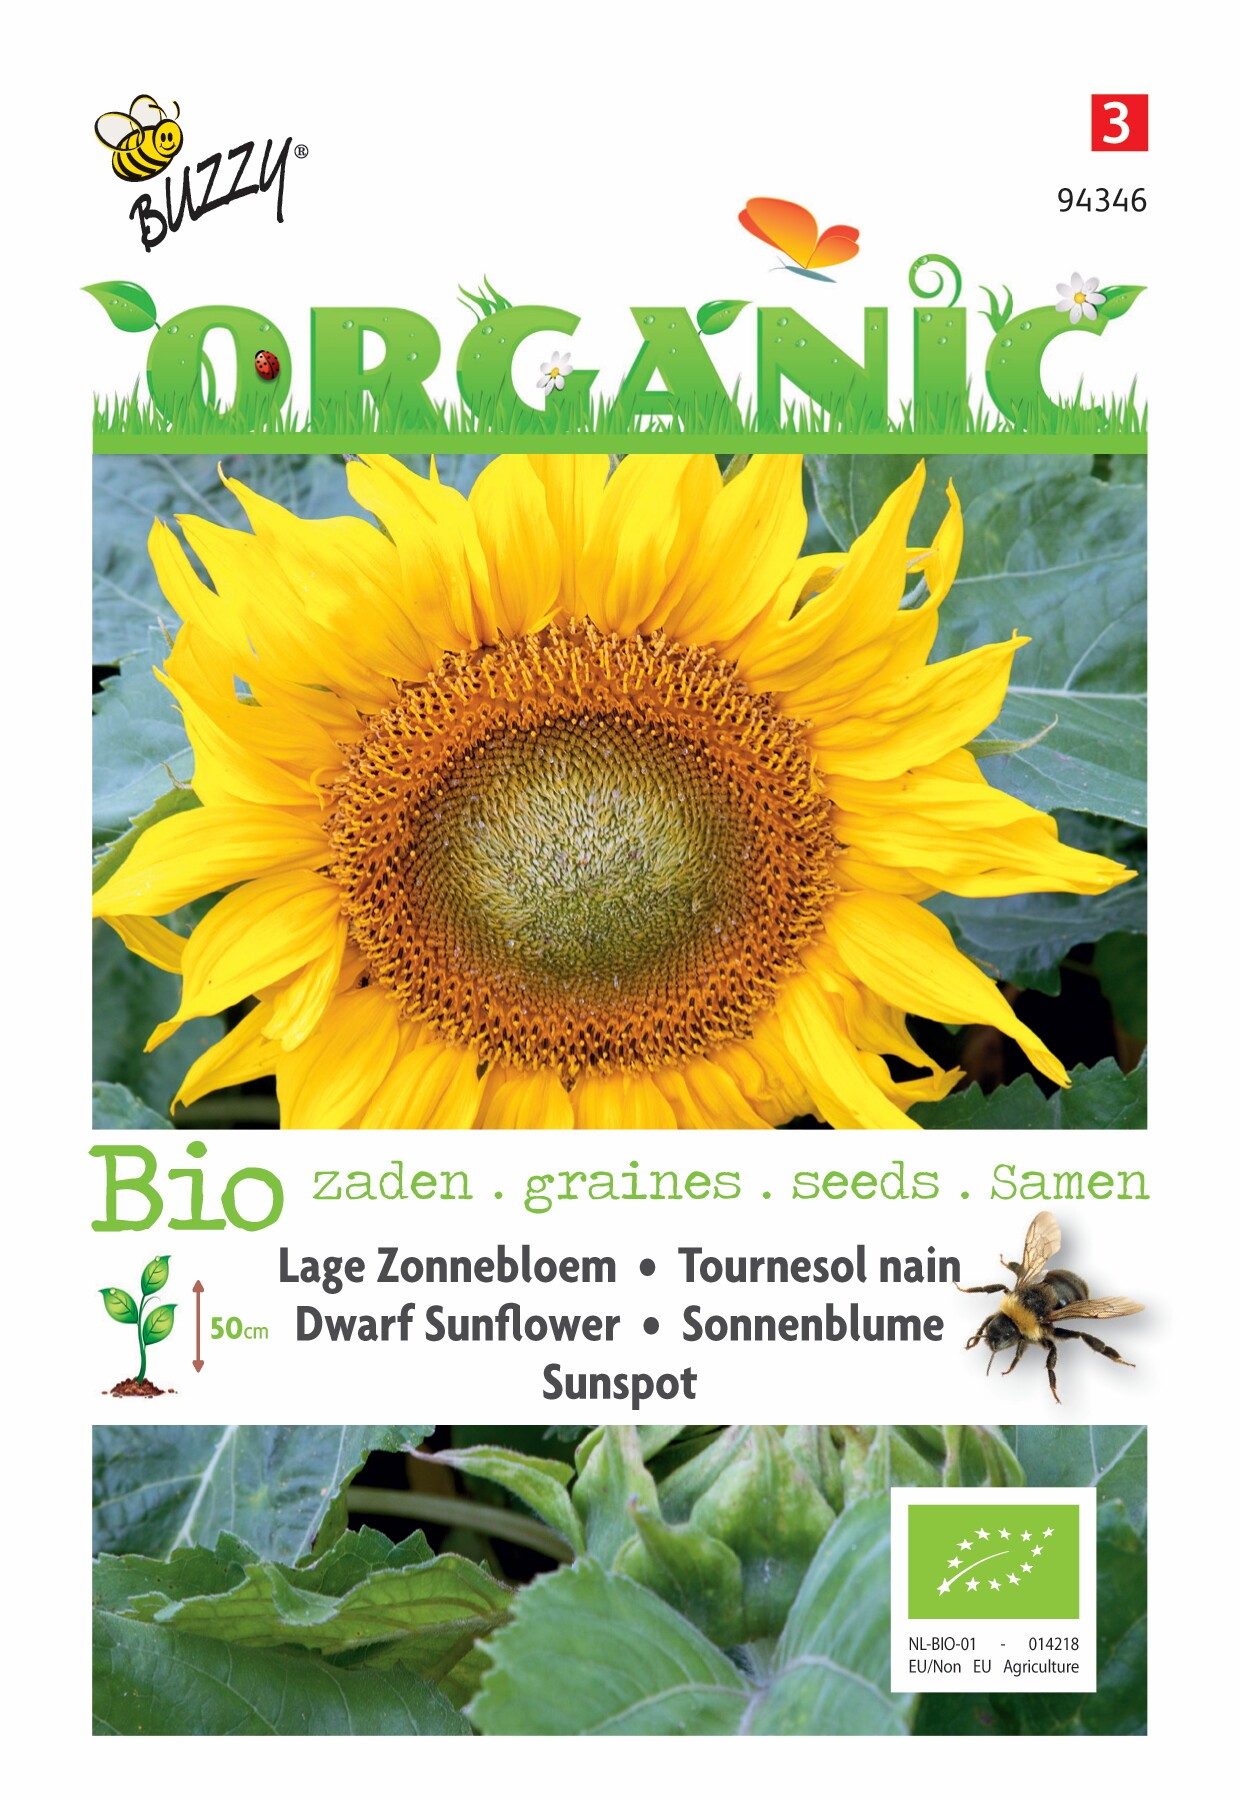 https://www.warentuin.nl/media/catalog/product/1/7/1778711117943464_buzzy_bio_organic_tuinzaden_buzzy_organic_helianthus_lage_zonn_715d.jpeg